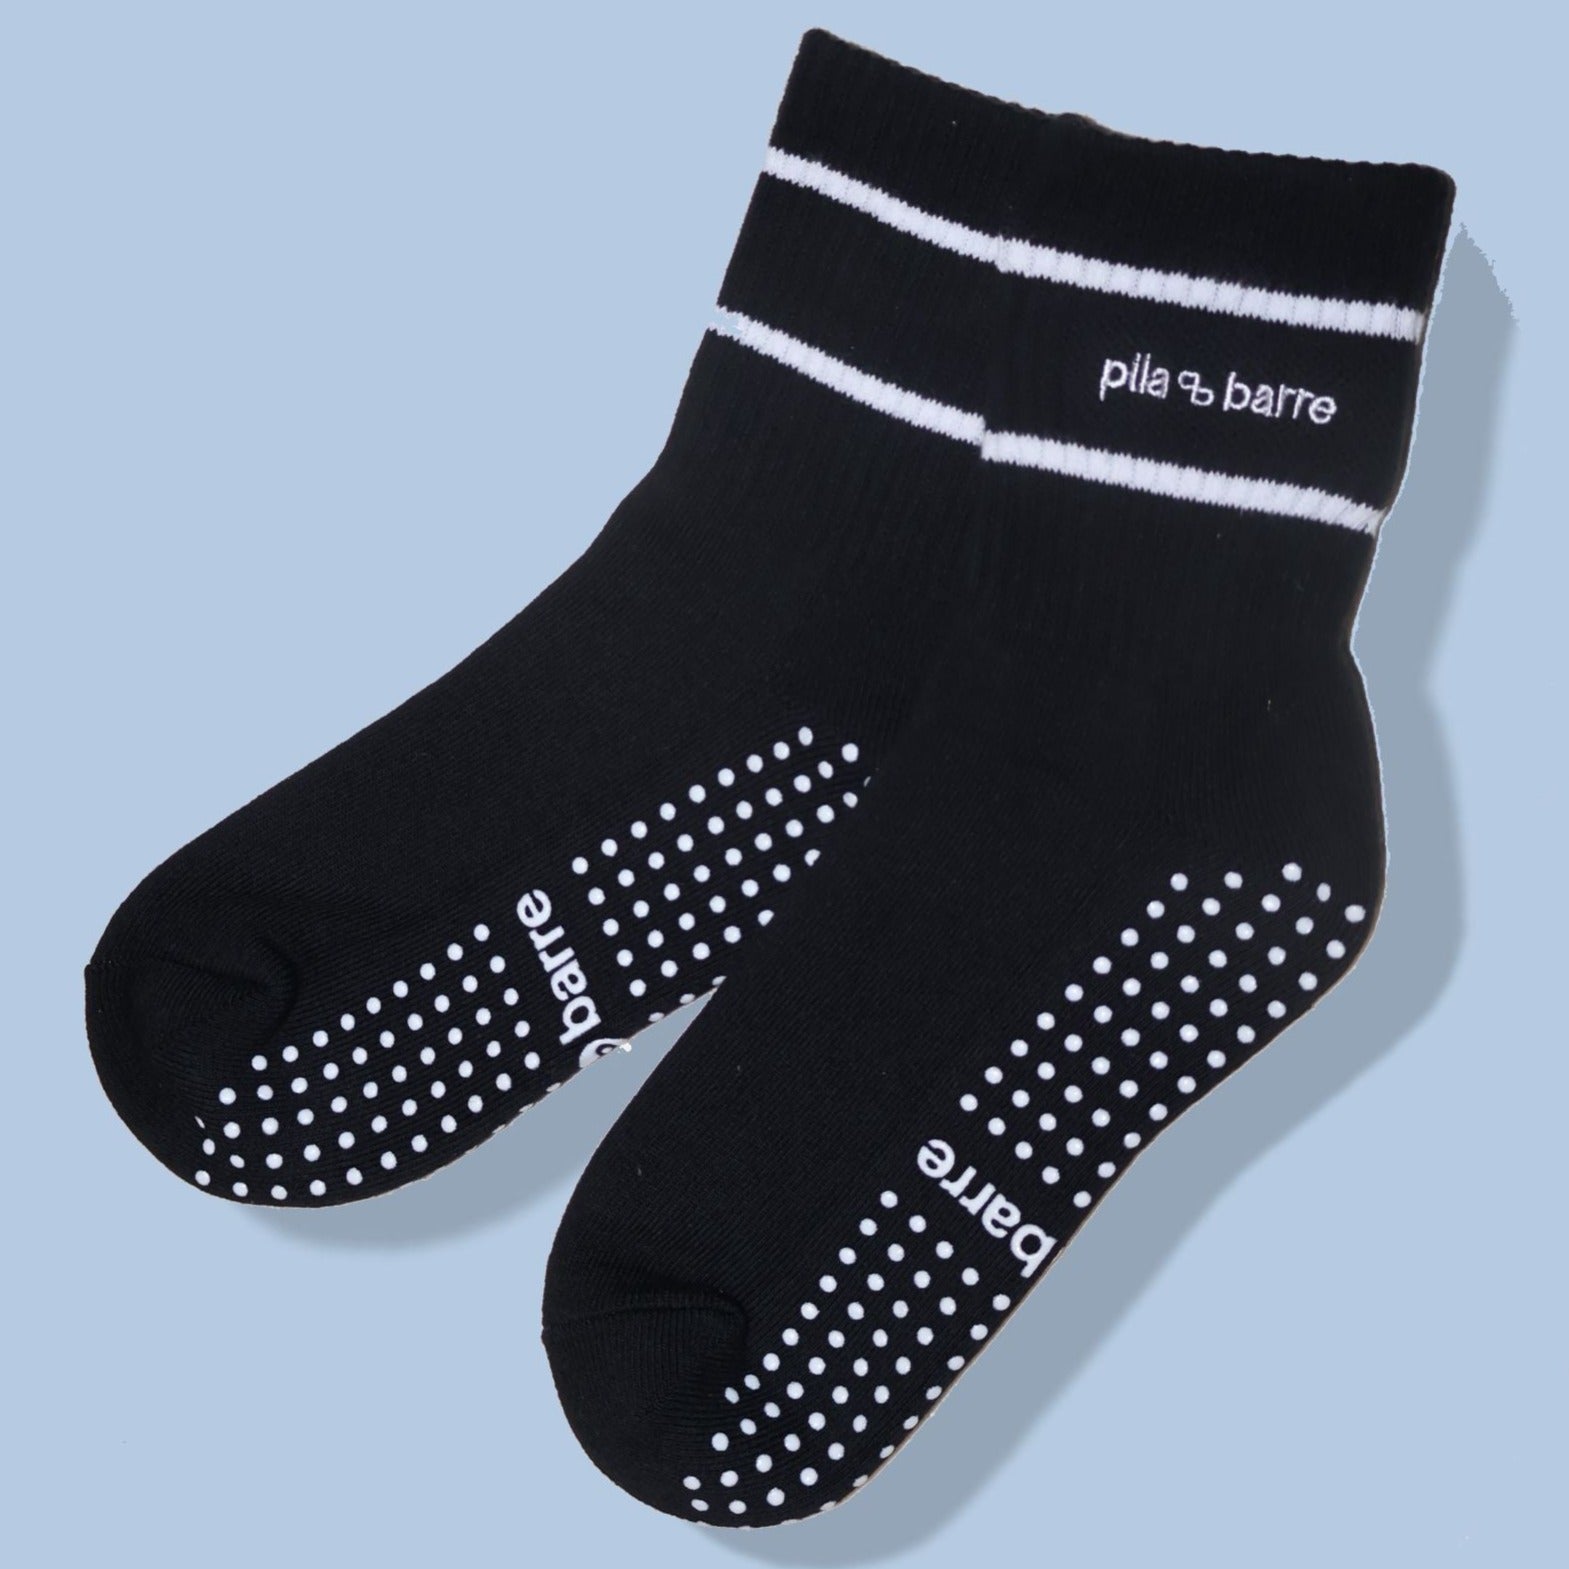 Star Grip Sock - Diamond Dust (Barre / Pilates)